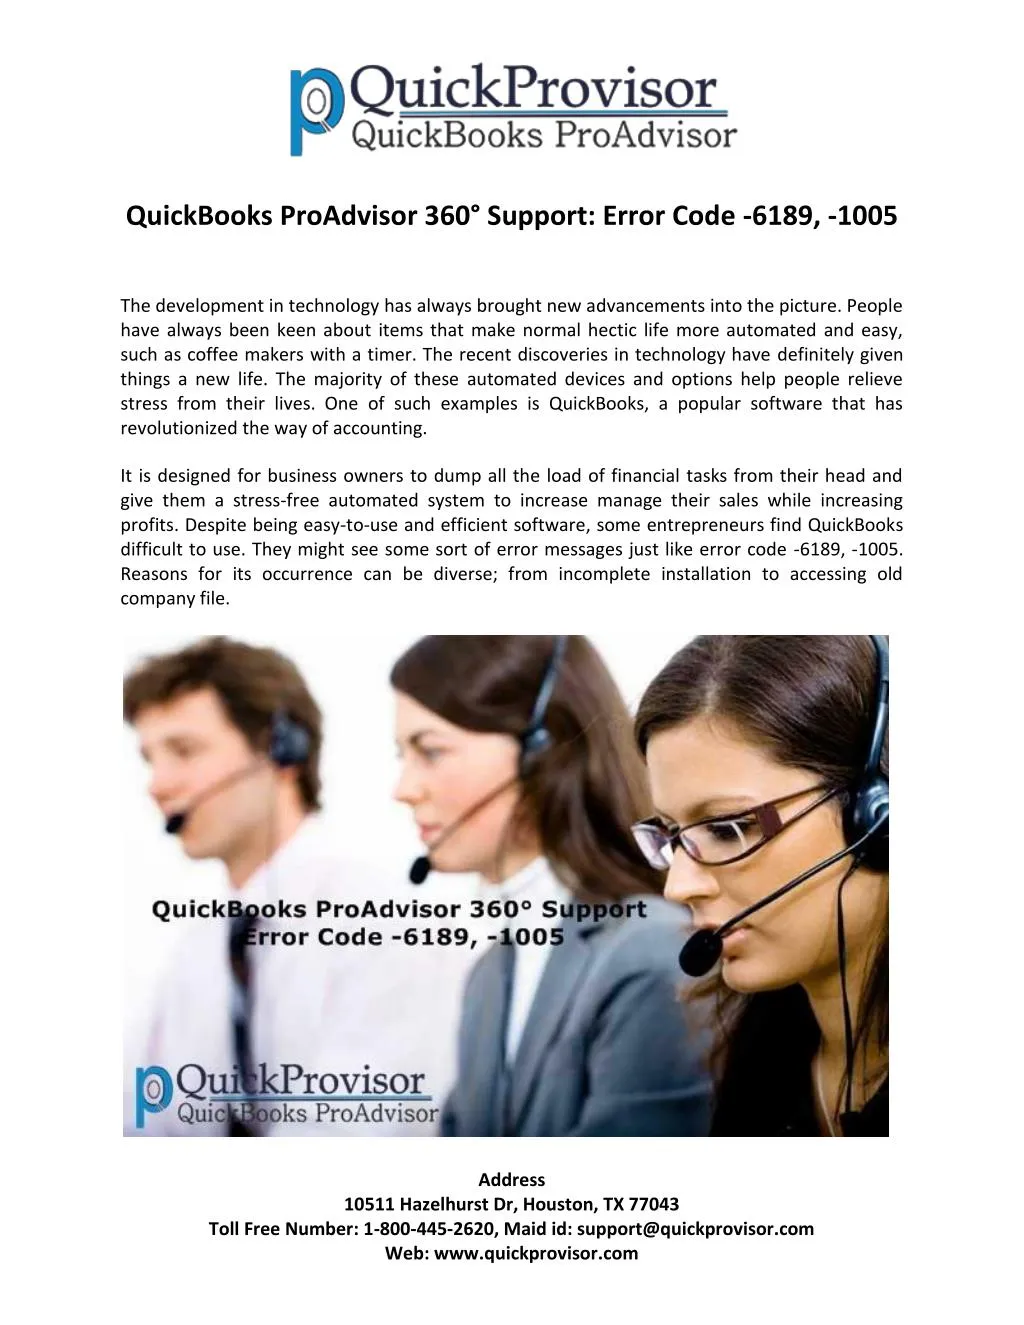 quickbooks proadvisor 360 support error code 6189